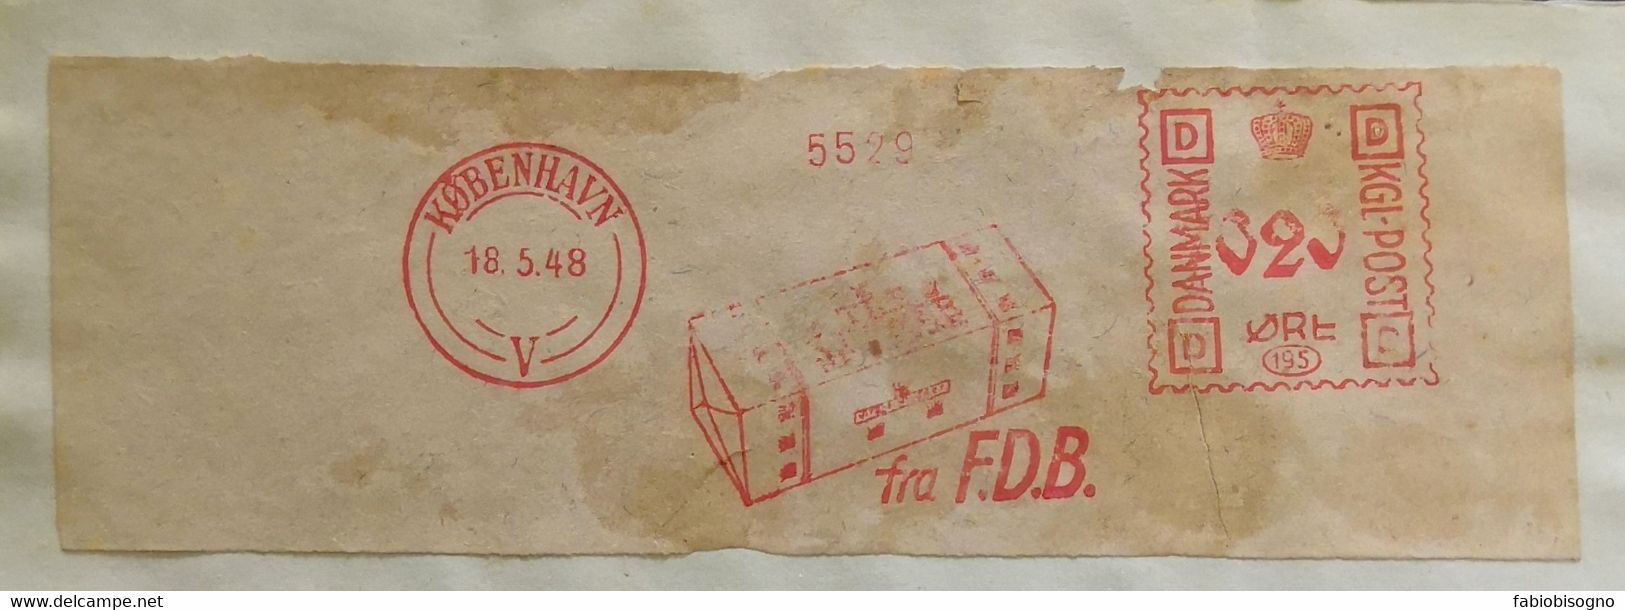 Danmark 1948 - Fra F.D.B. - EMA Meter Freistempel Fragment - Máquinas Franqueo (EMA)